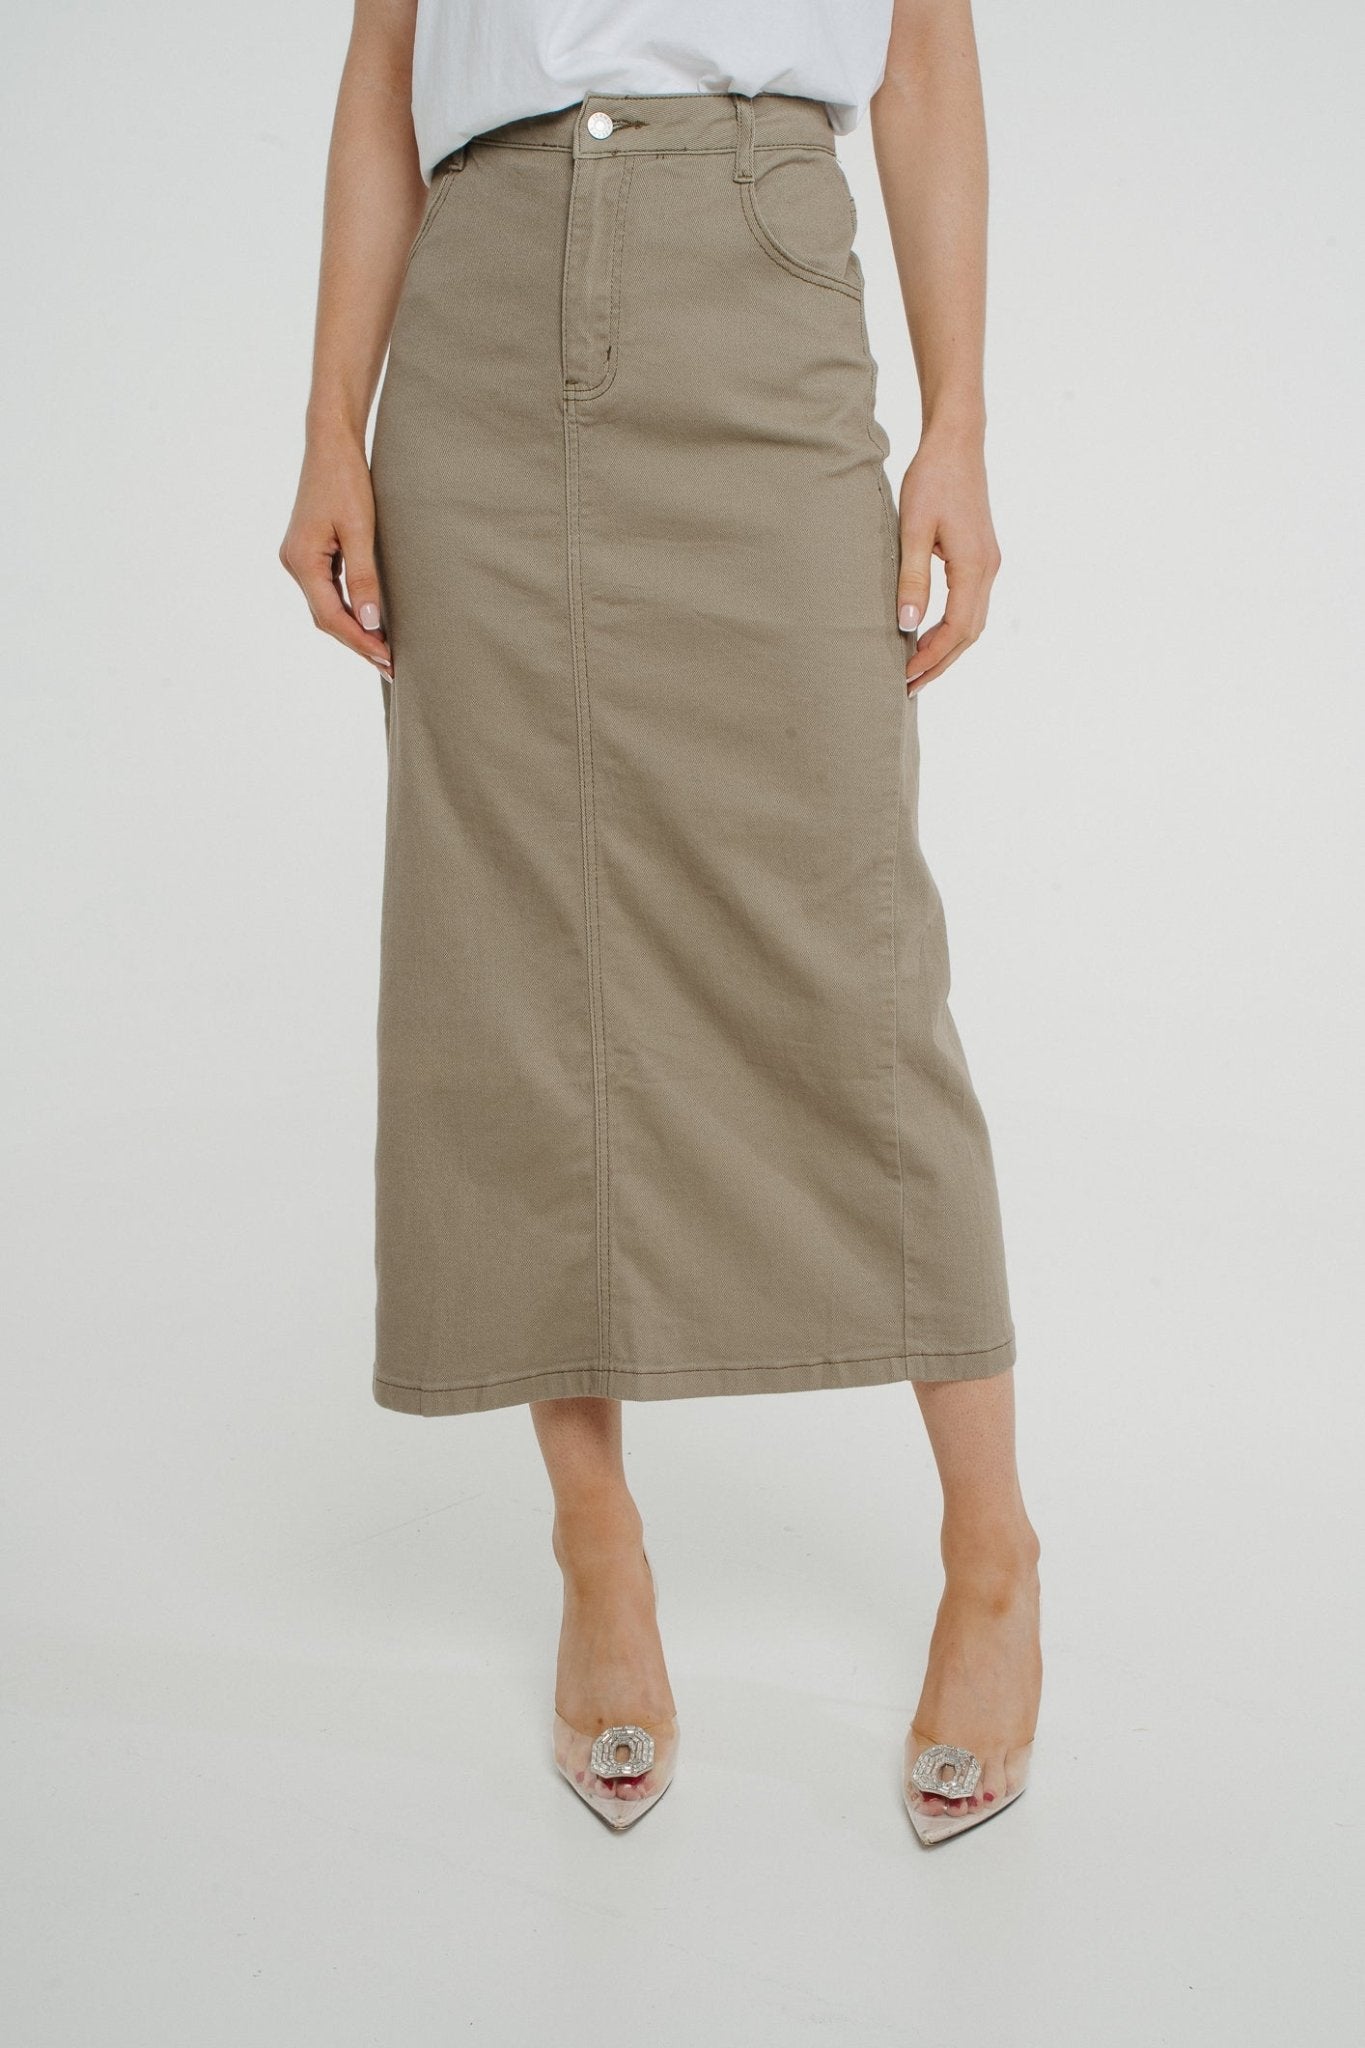 Ivy Midi Skirt In Khaki - The Walk in Wardrobe